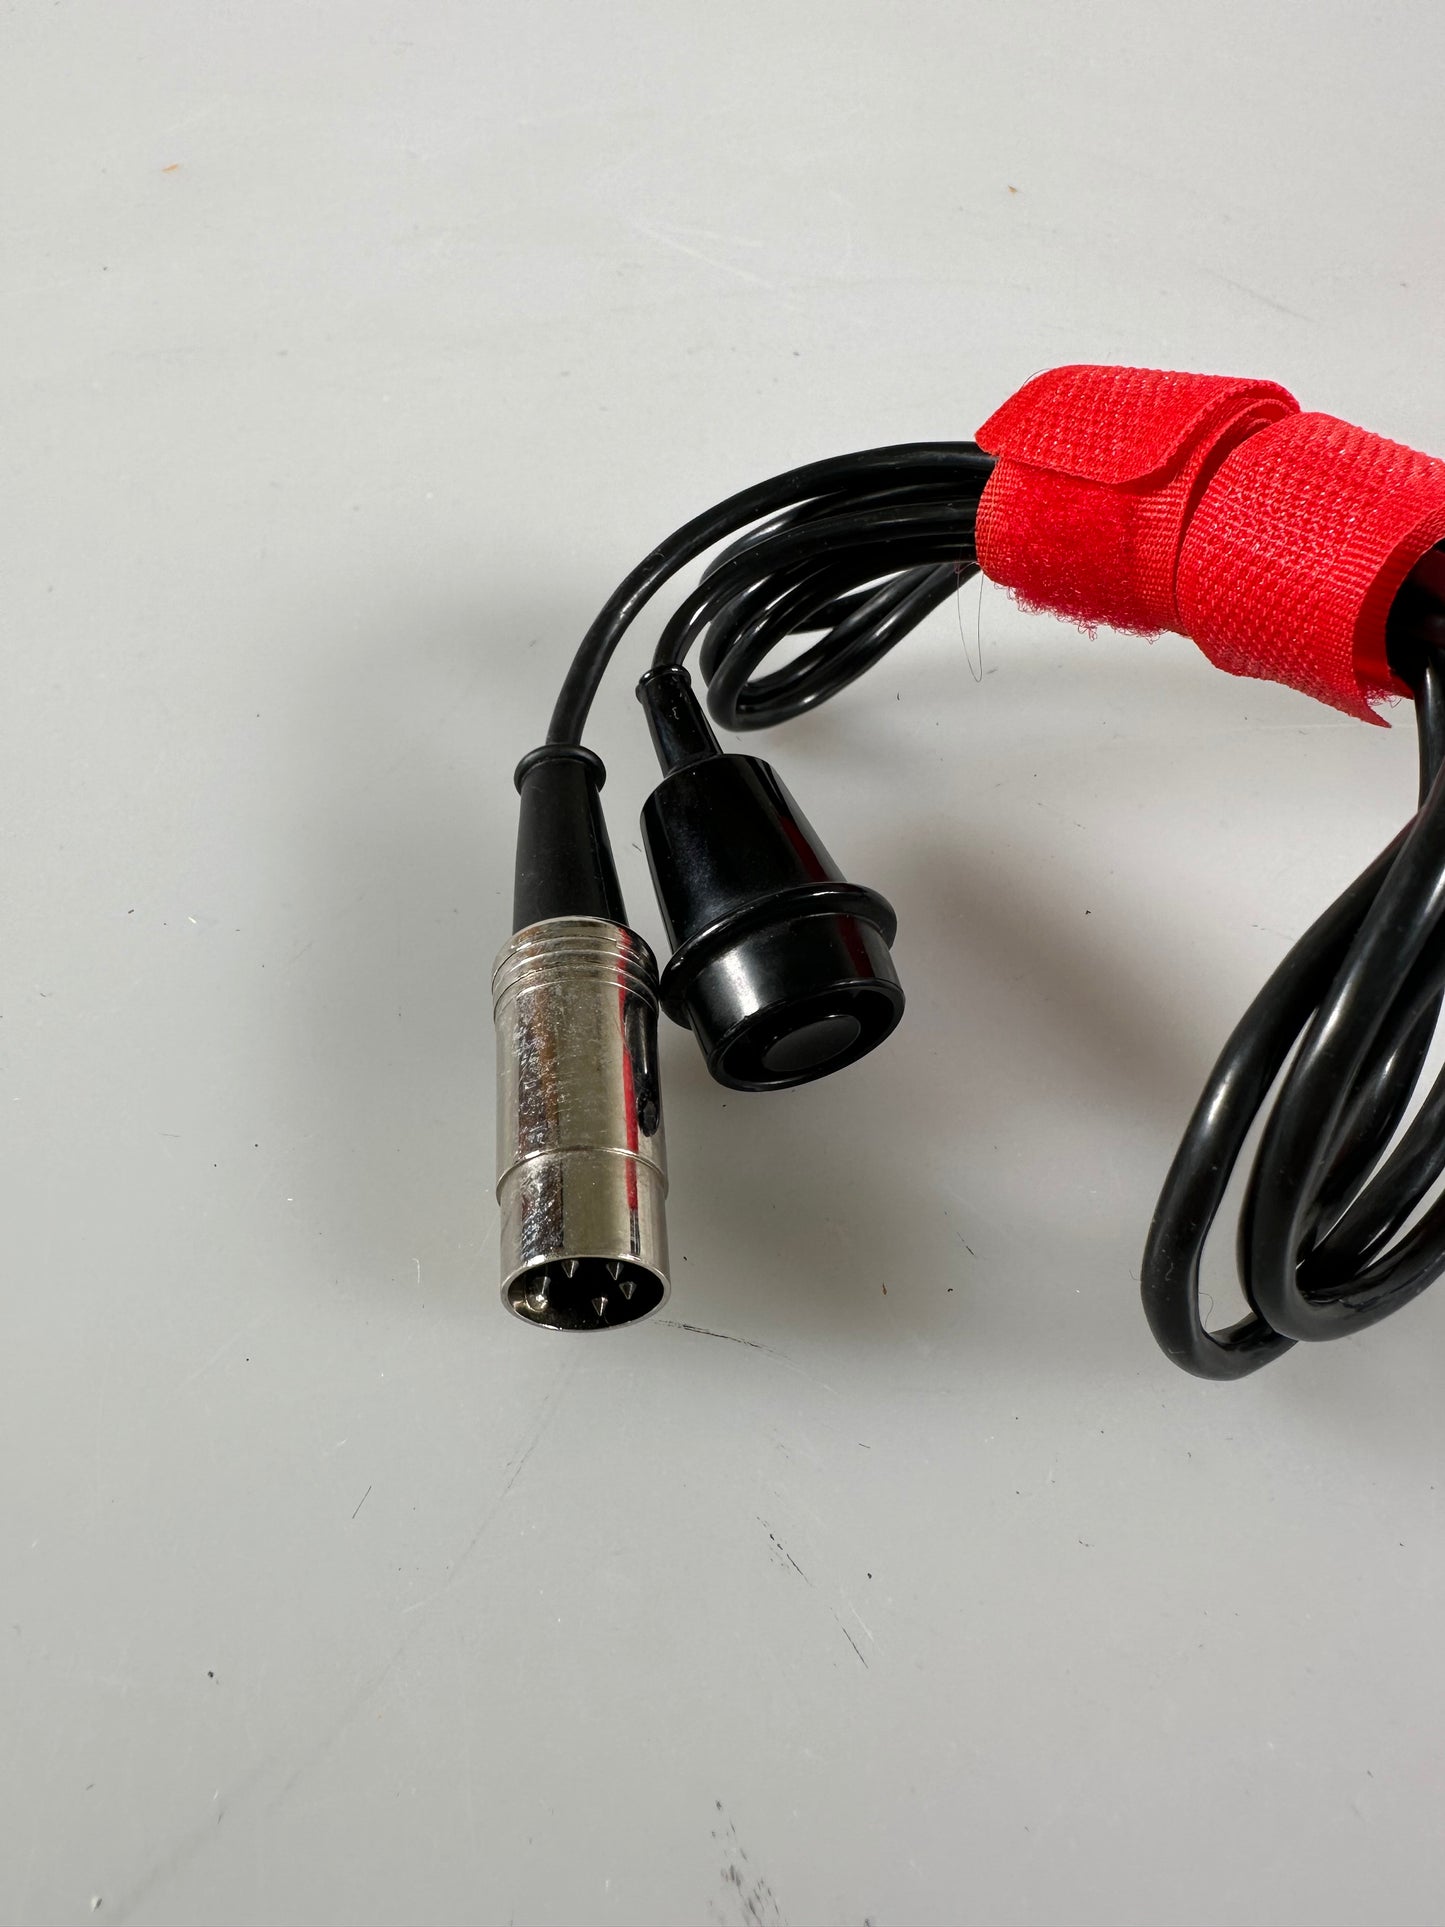 Hasselblad SK-150 Shutter Cable Release 46086 For 500EL & 500ELM Cameras